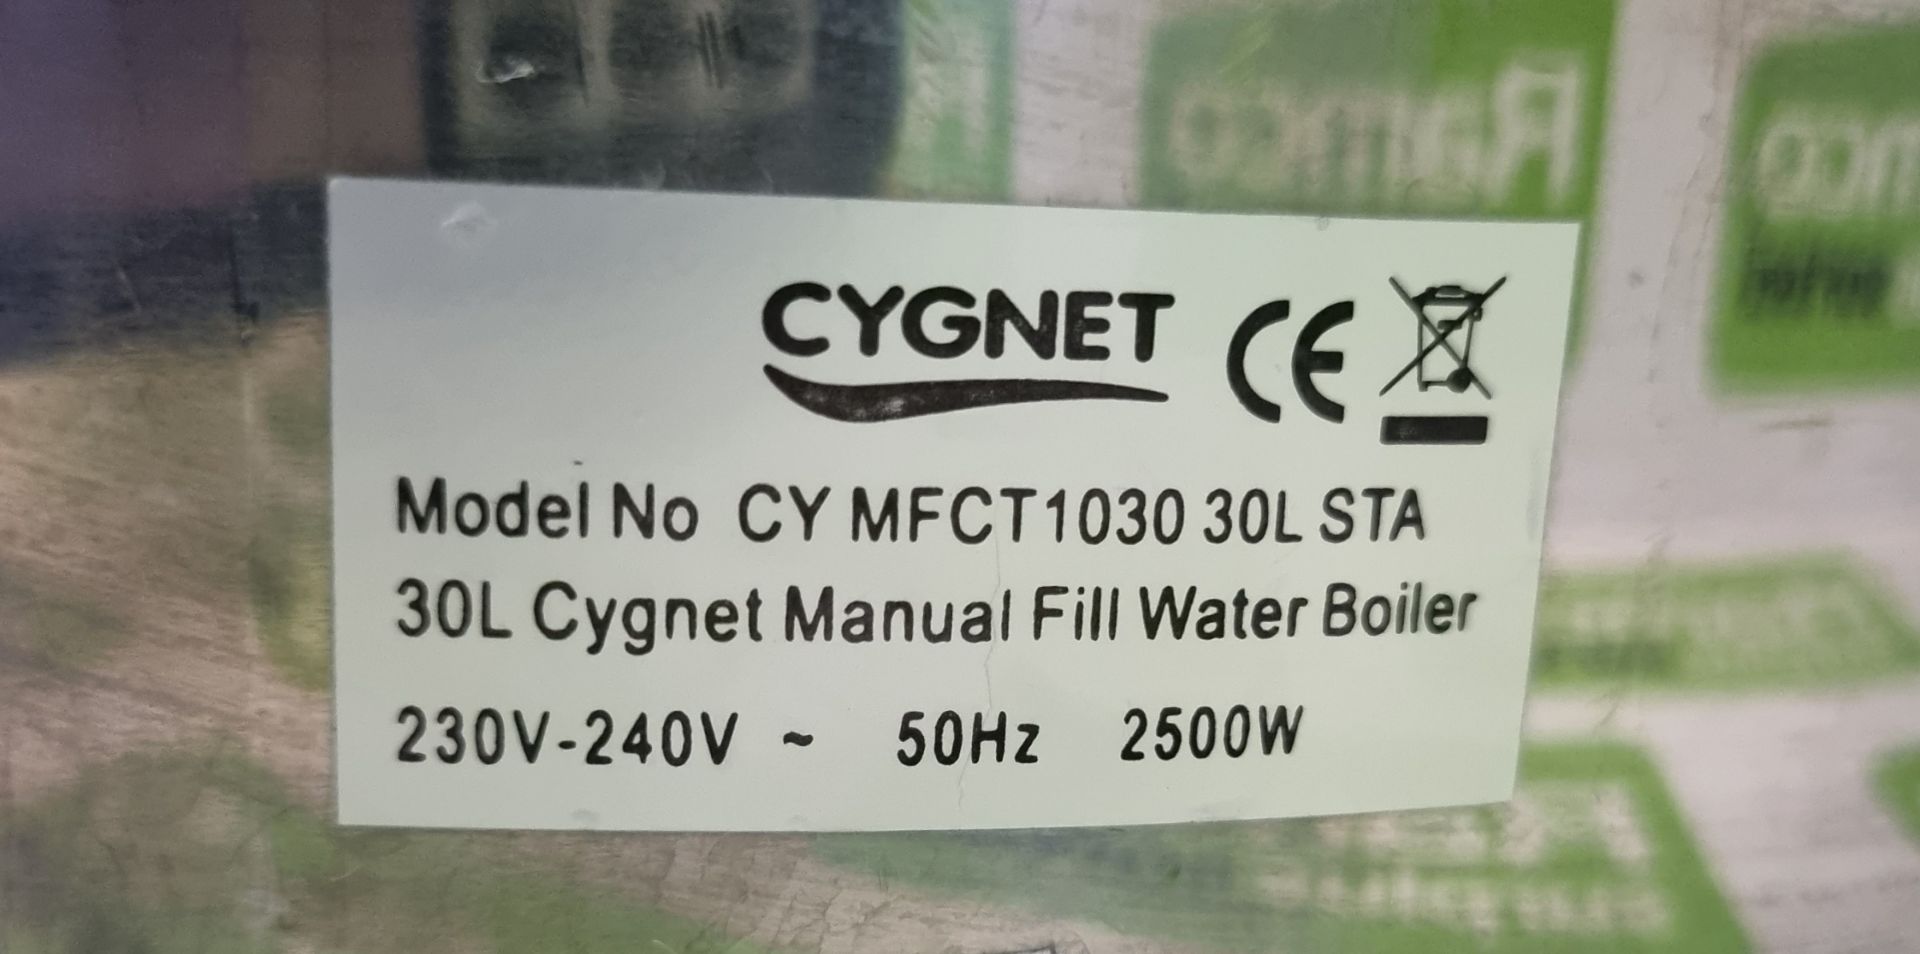 Cygnet MFCT1030 manual fill water boiler - Image 4 of 4